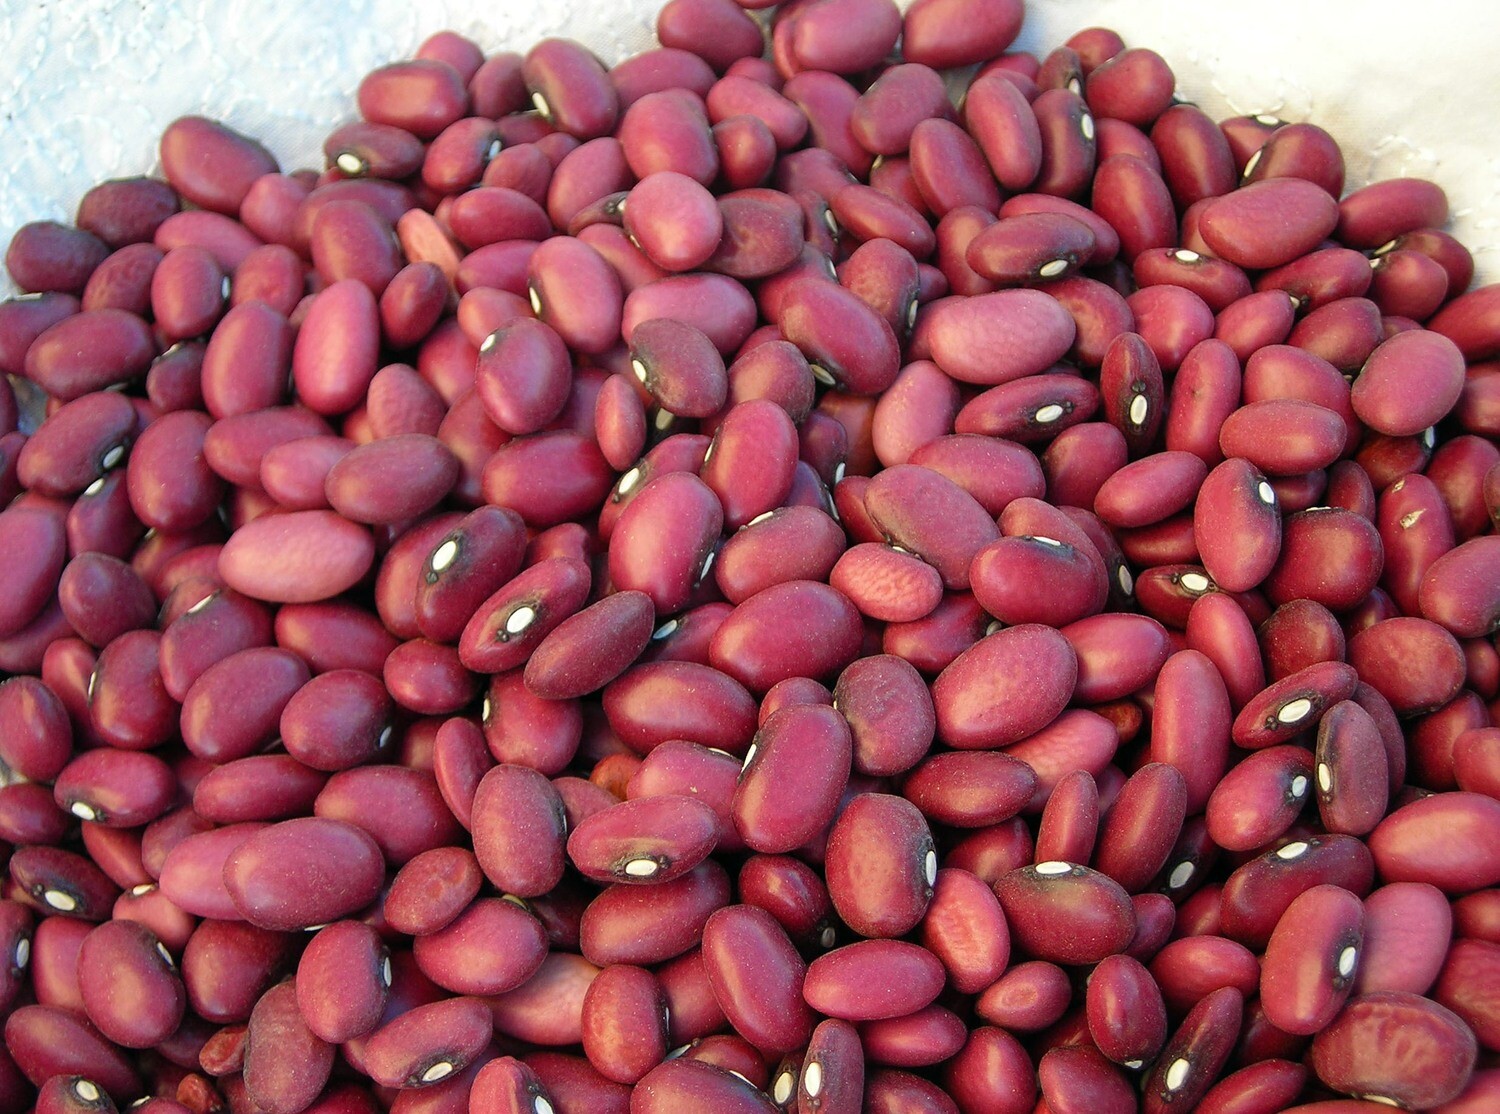 Beans (Bush Beans)